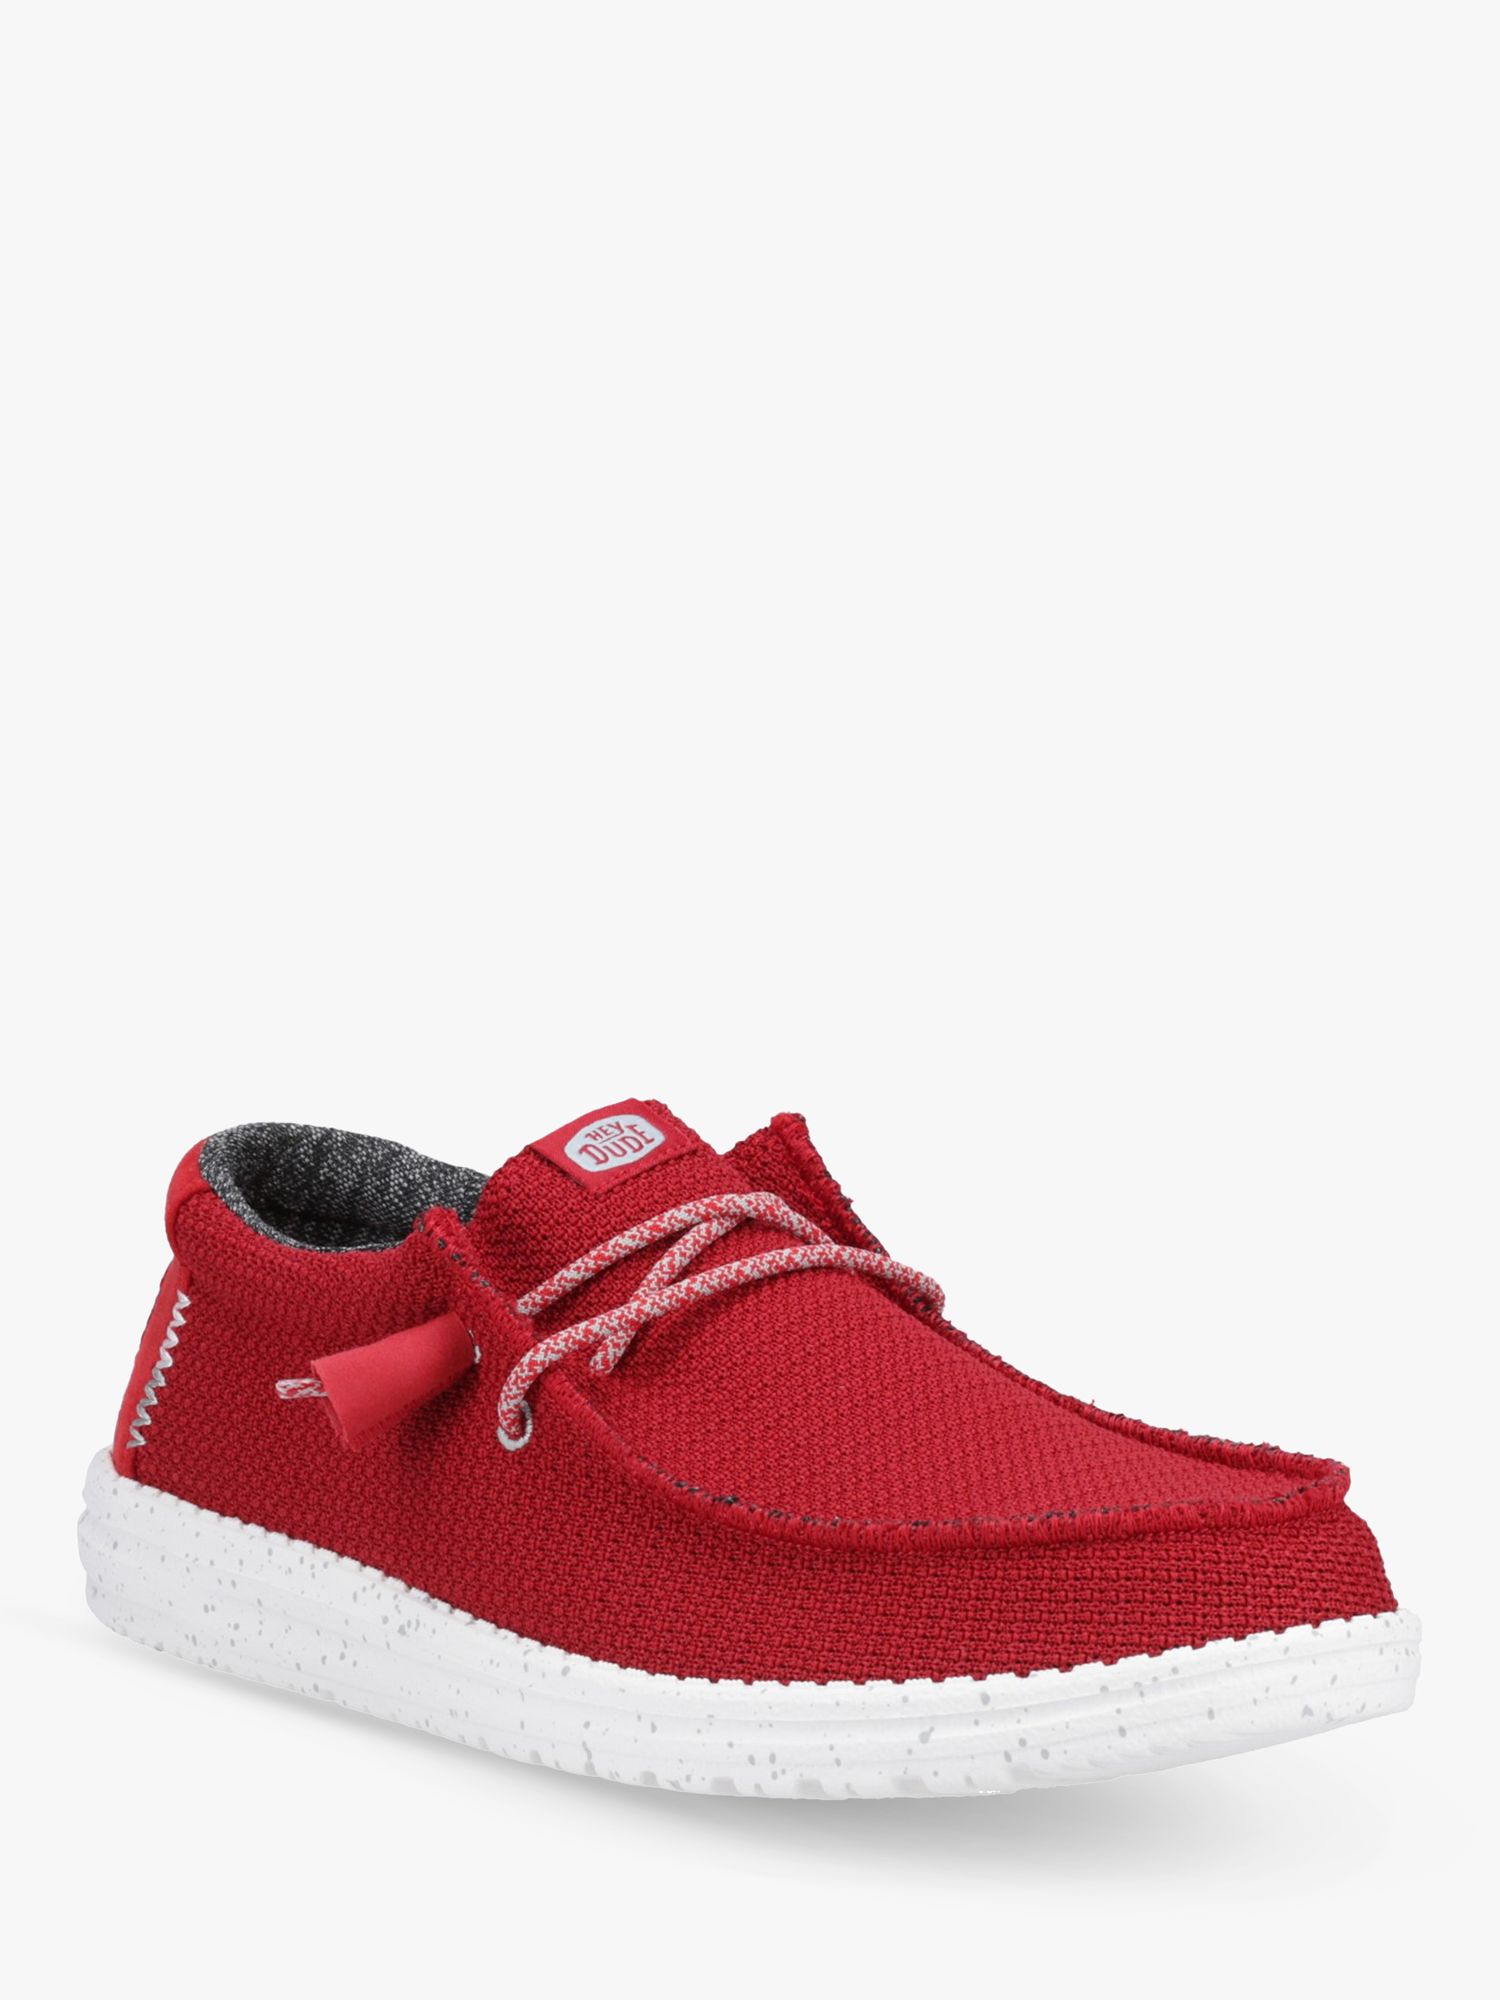 Hey Dude Wally Sport Mesh Shoe, Dark Red, 11